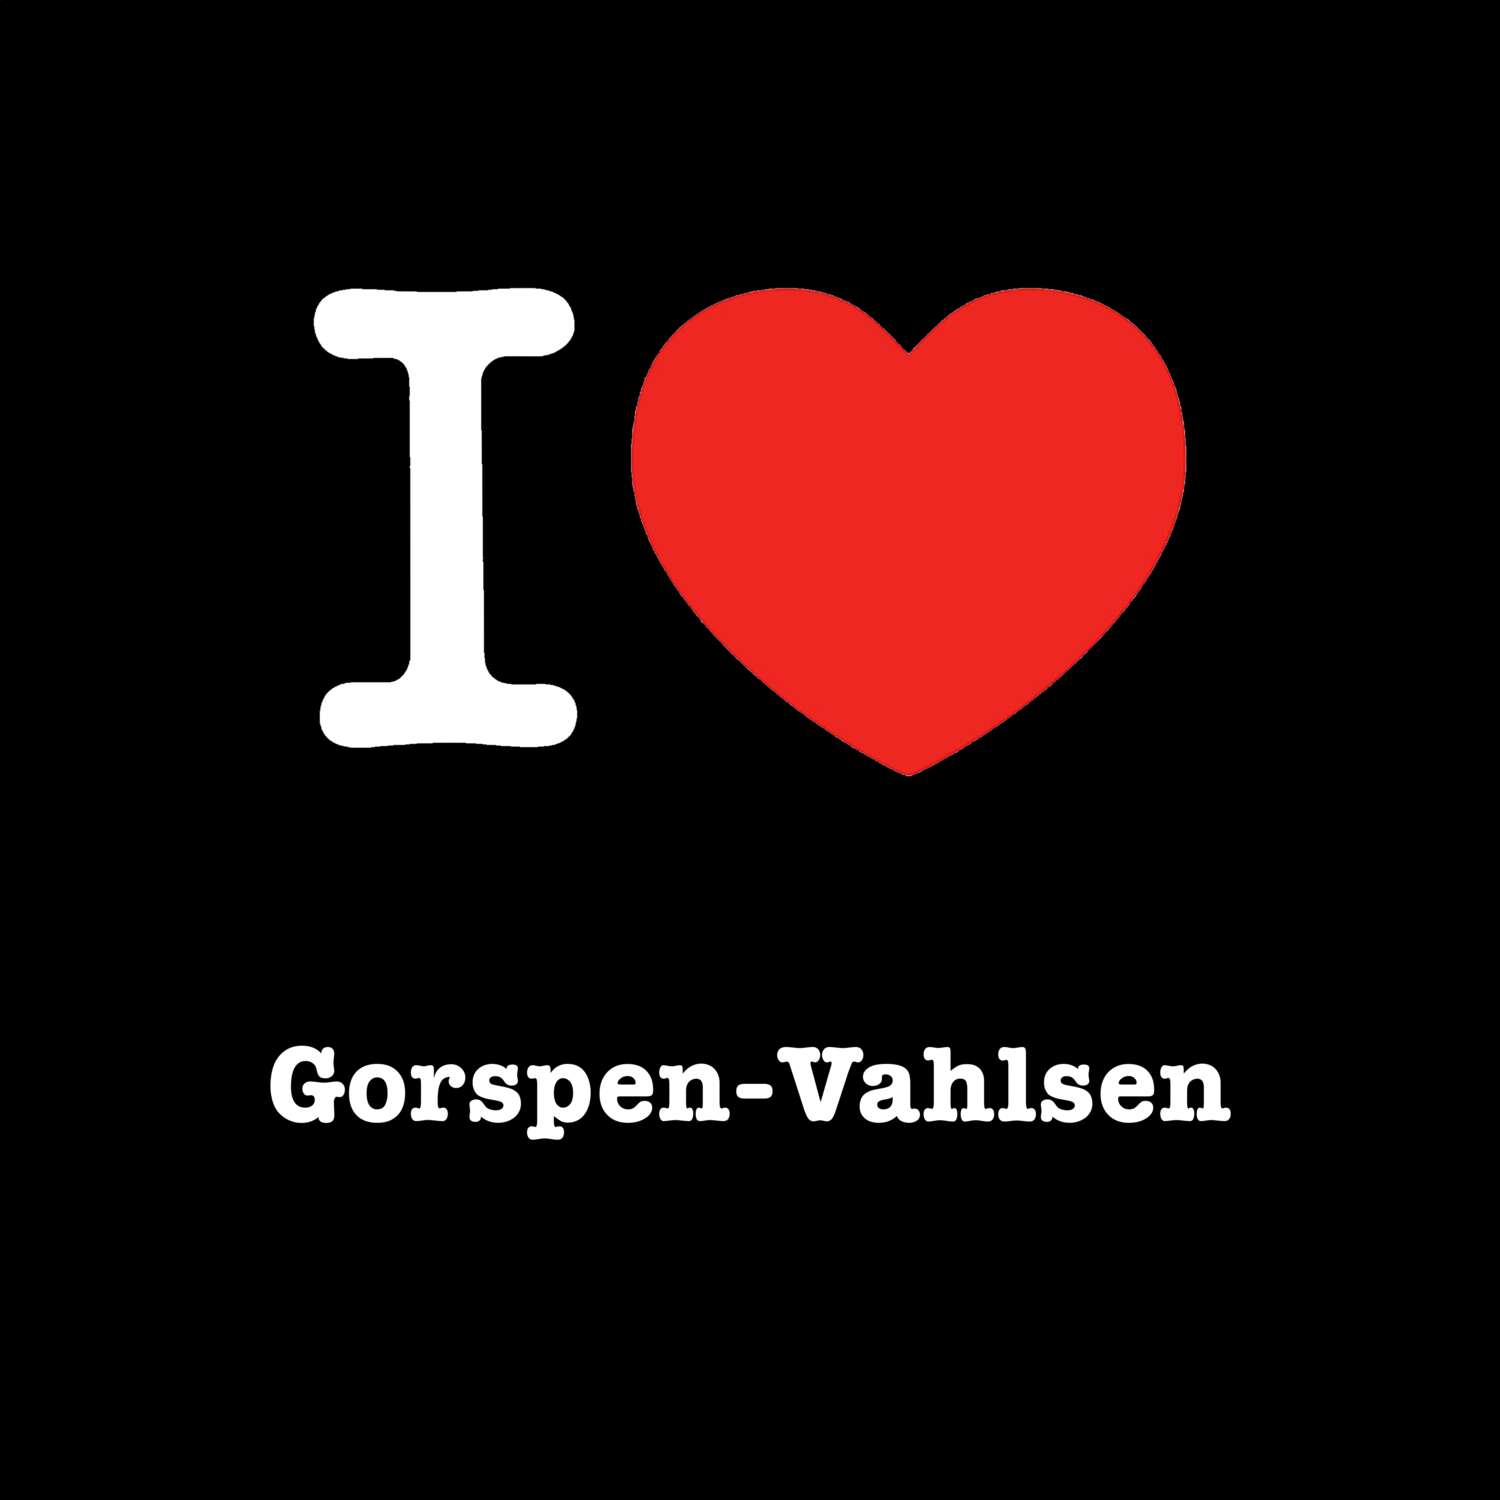 Gorspen-Vahlsen T-Shirt »I love«